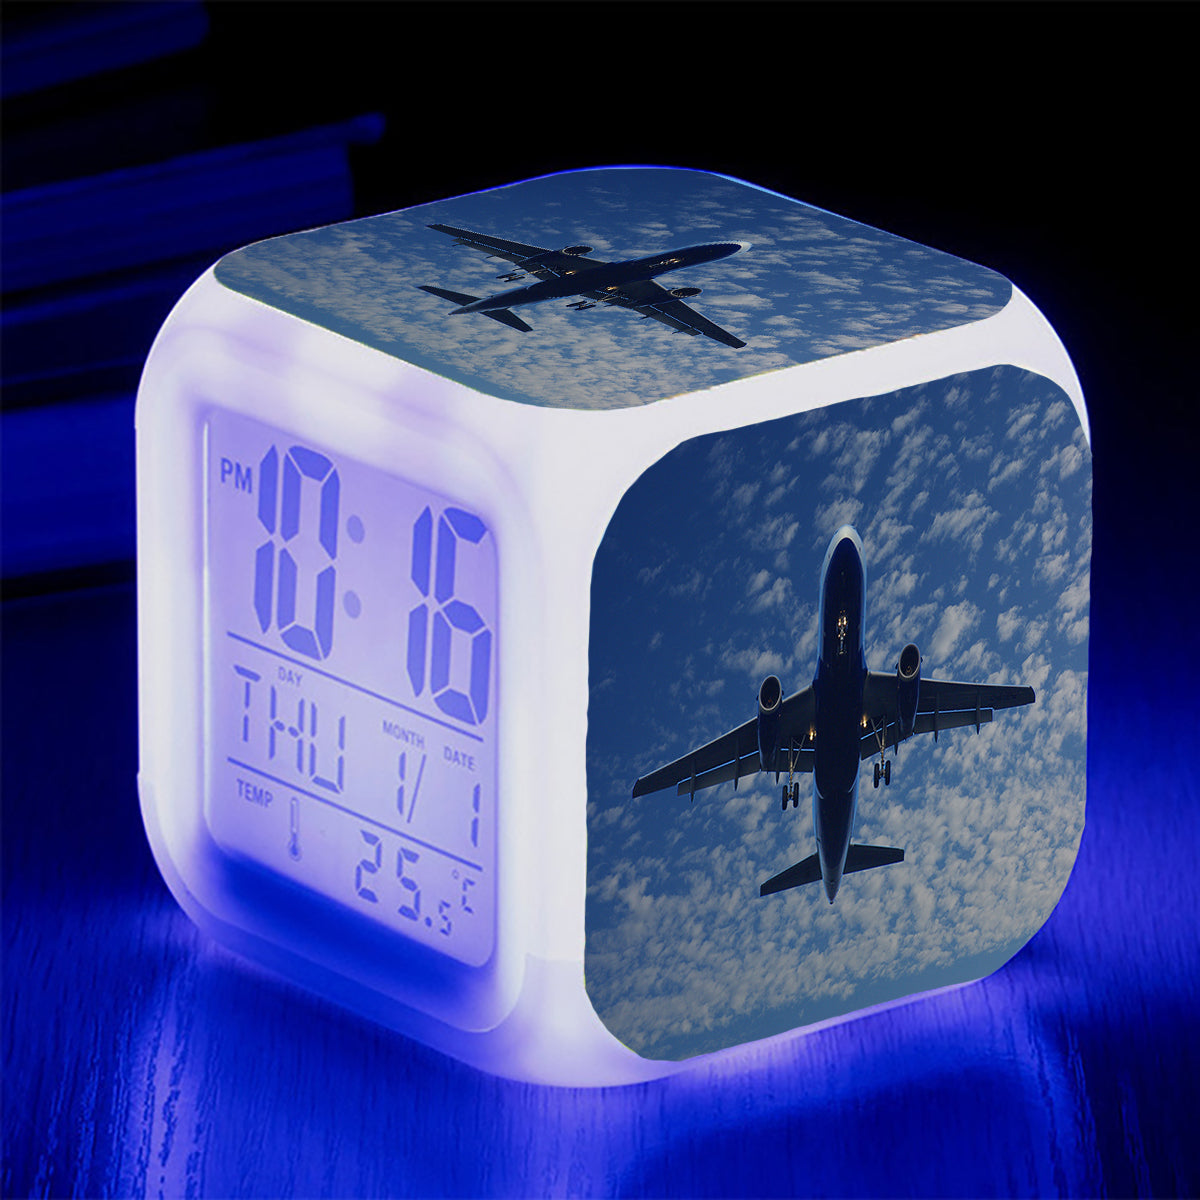 Airplane From Below Designed "7 Colour" Digital Alarm Clock